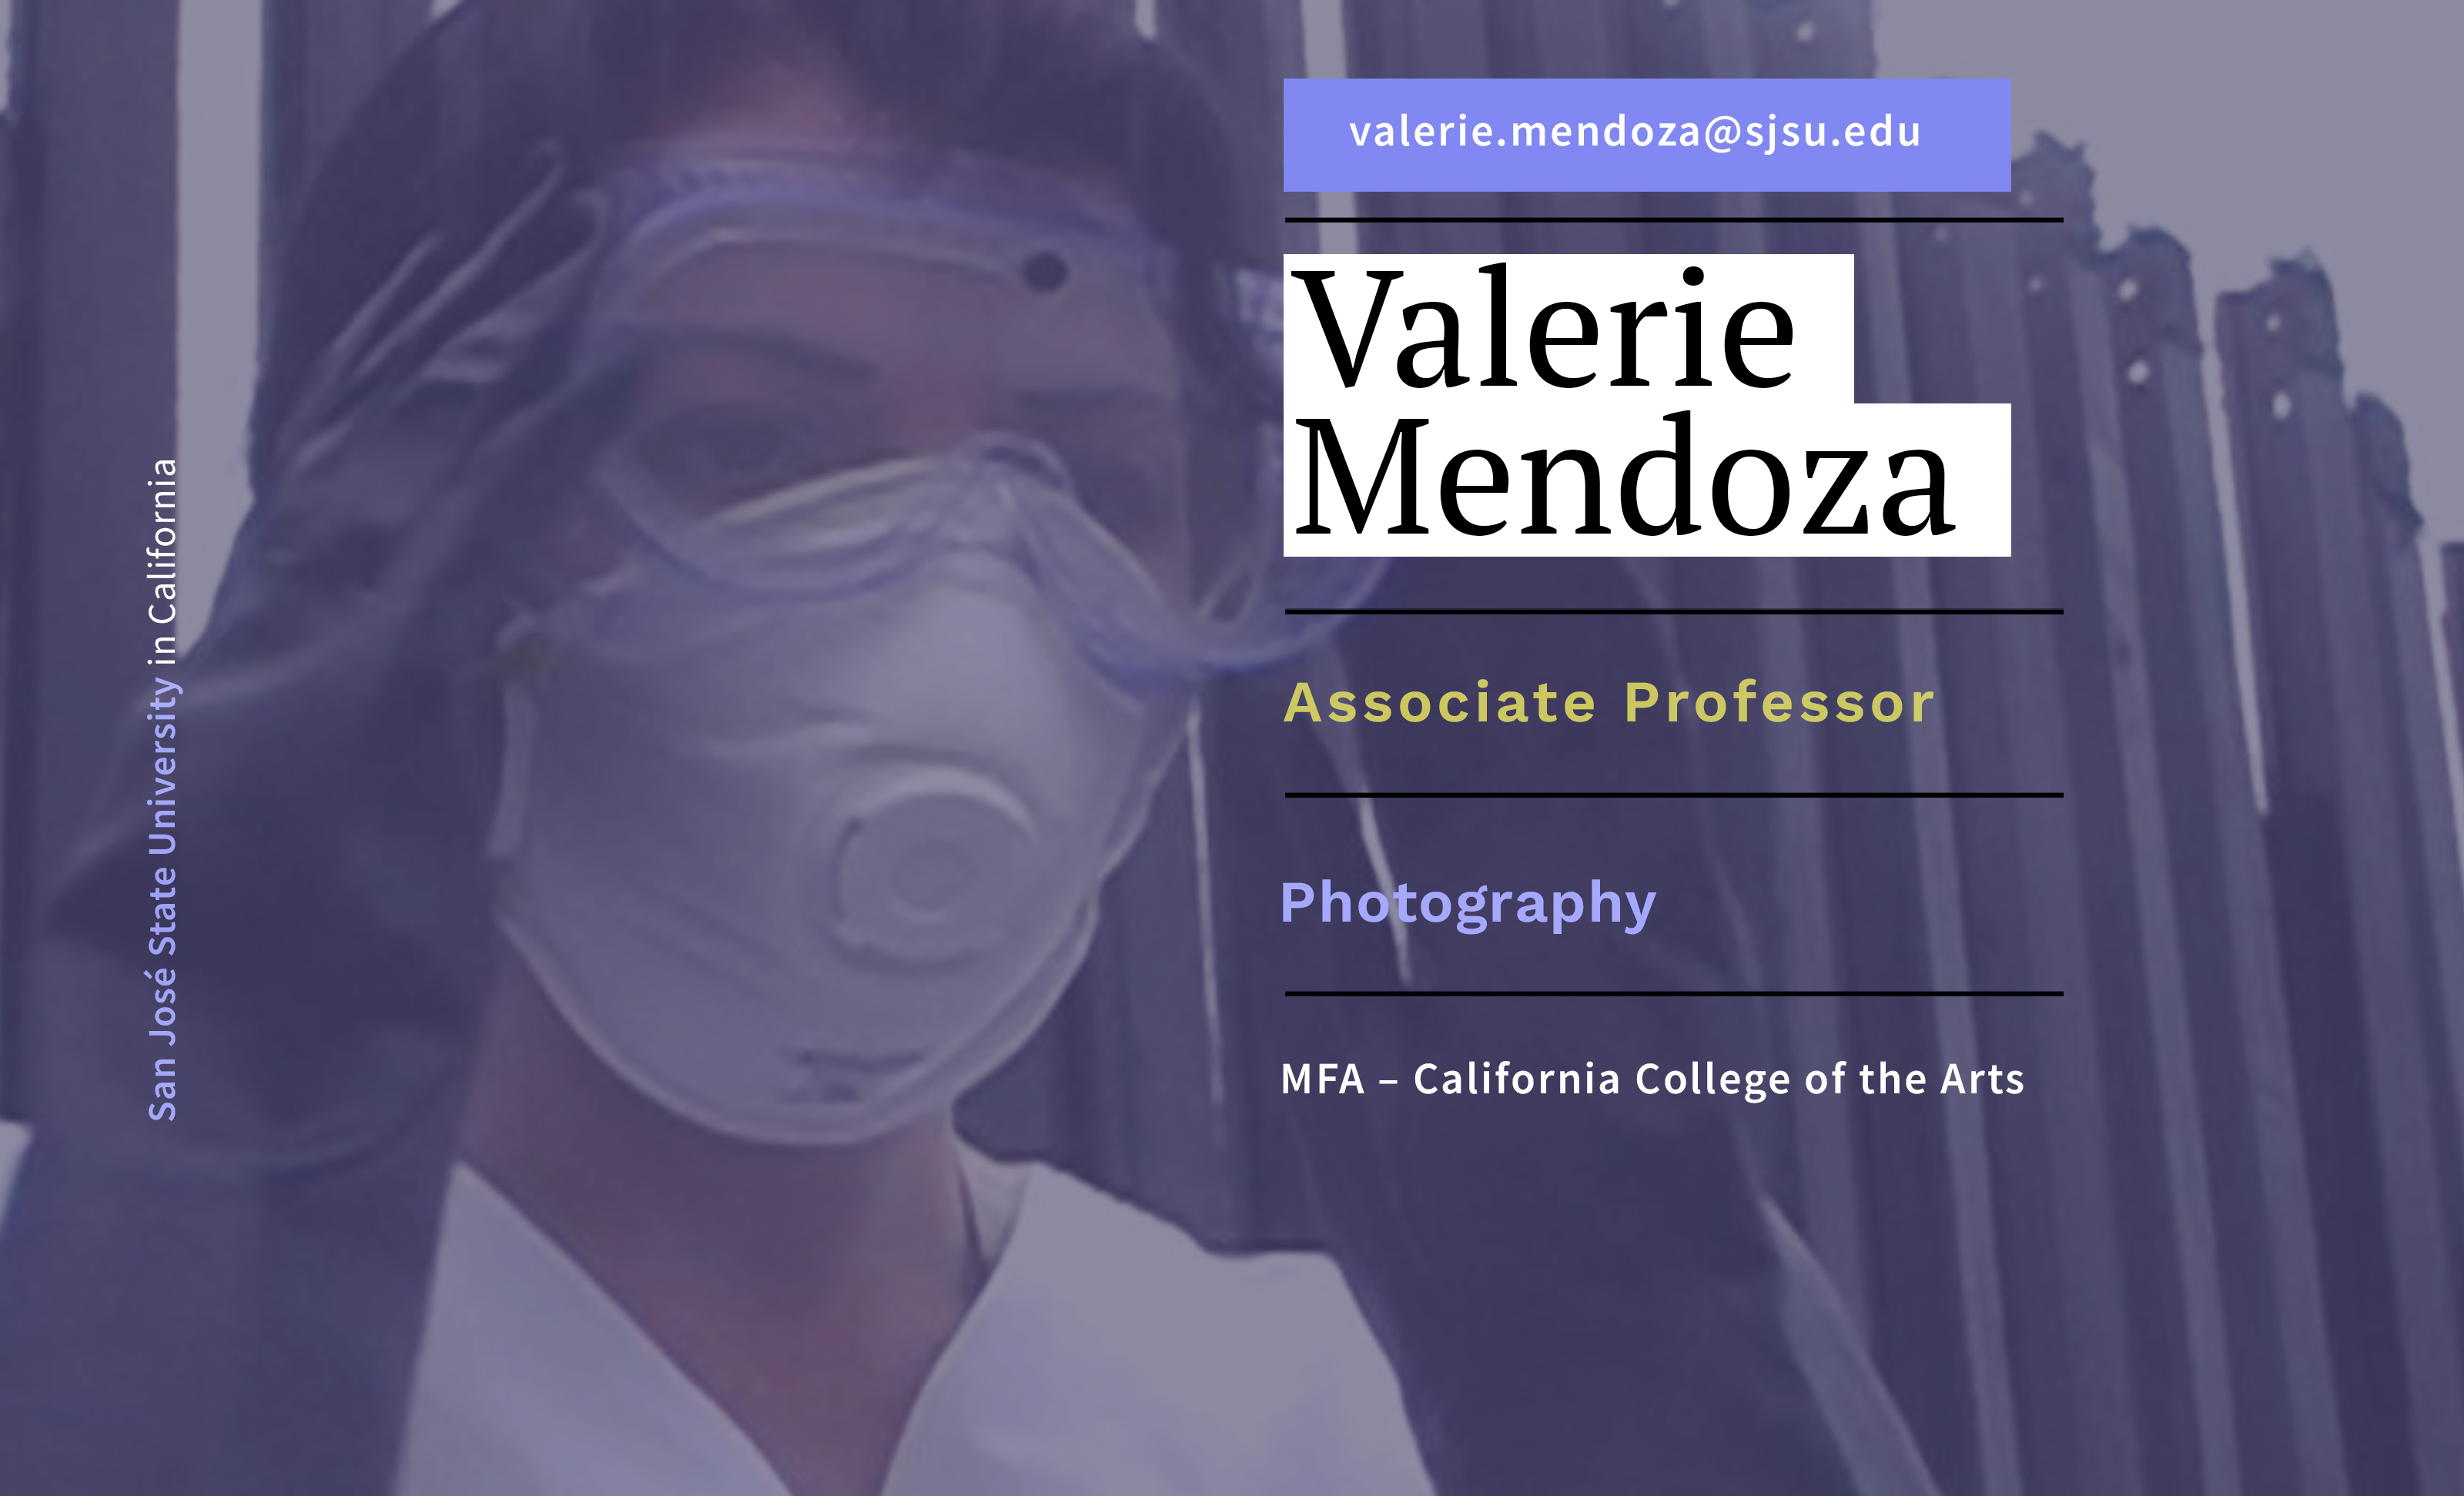 Valerie Mendoza wearing personal protective equipment.